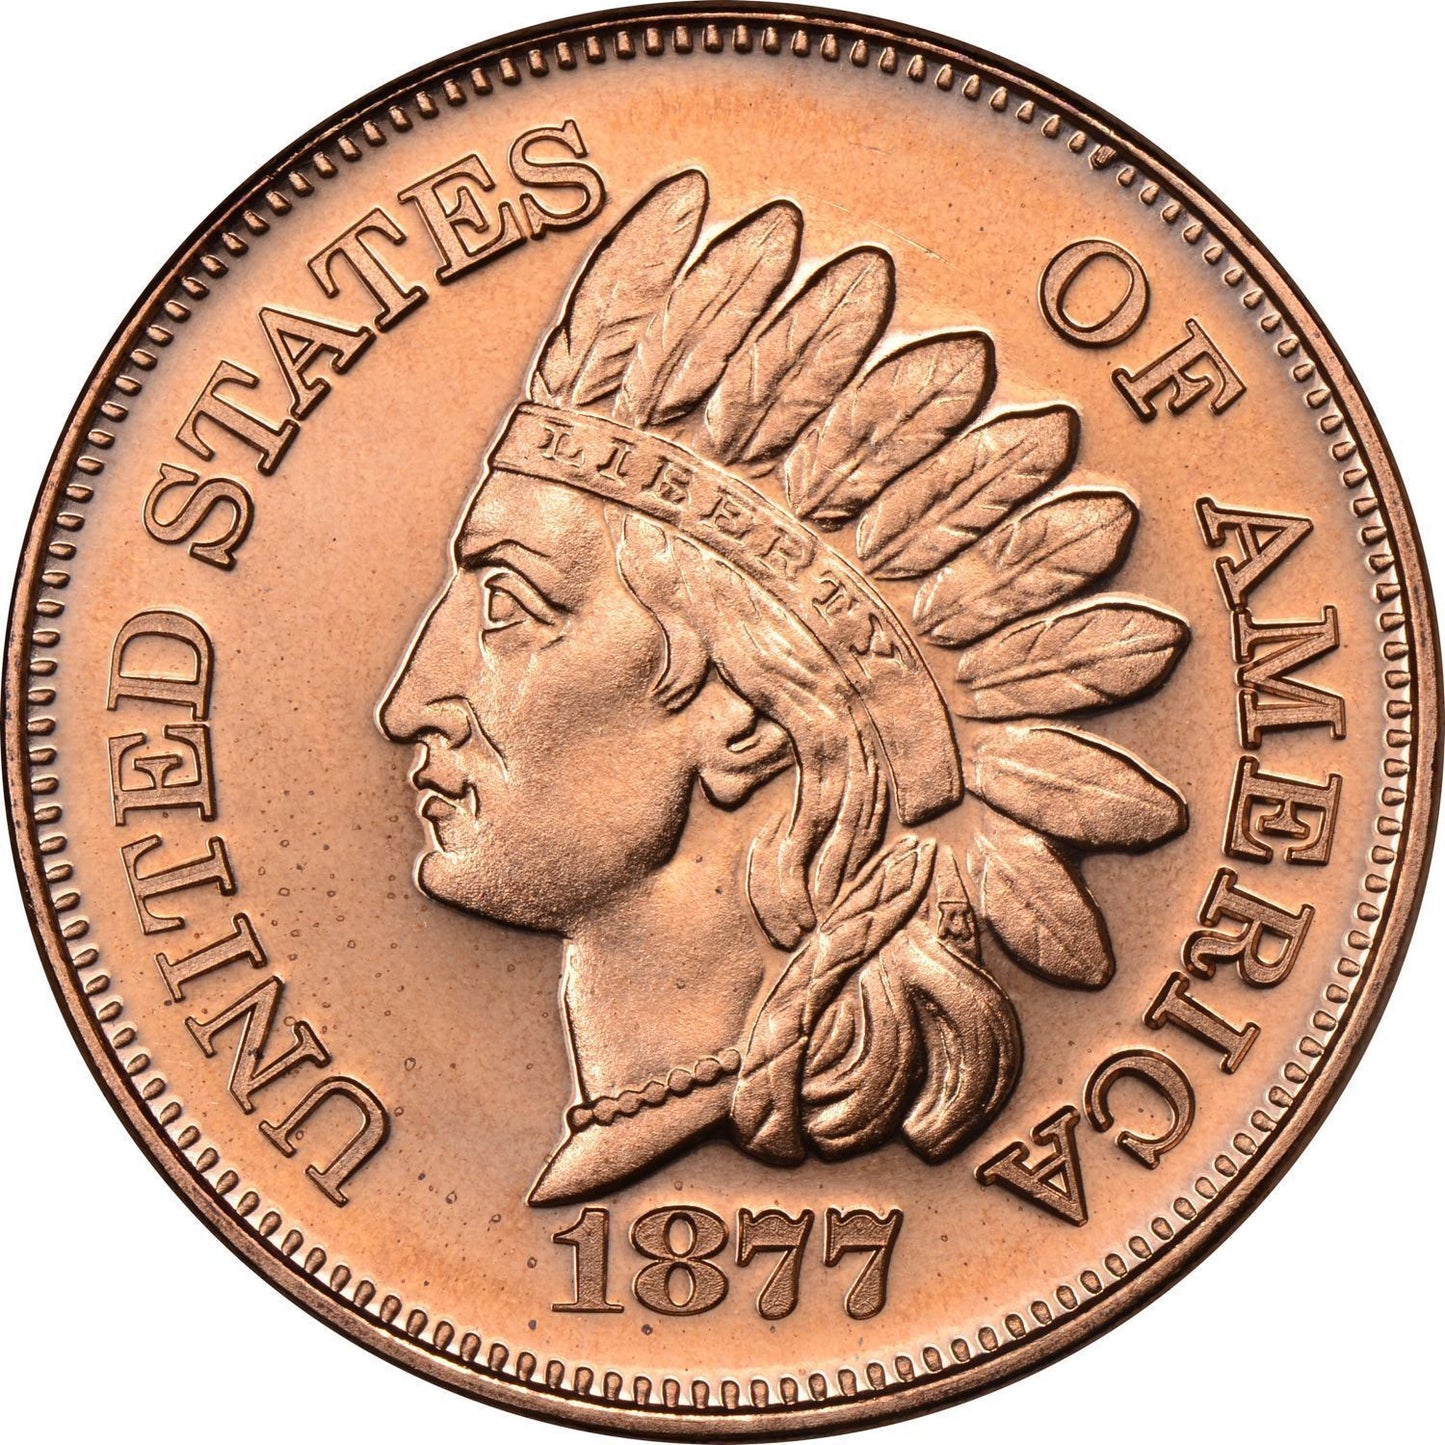 2 Copper Bullion Coins & 2 Antique USA coins